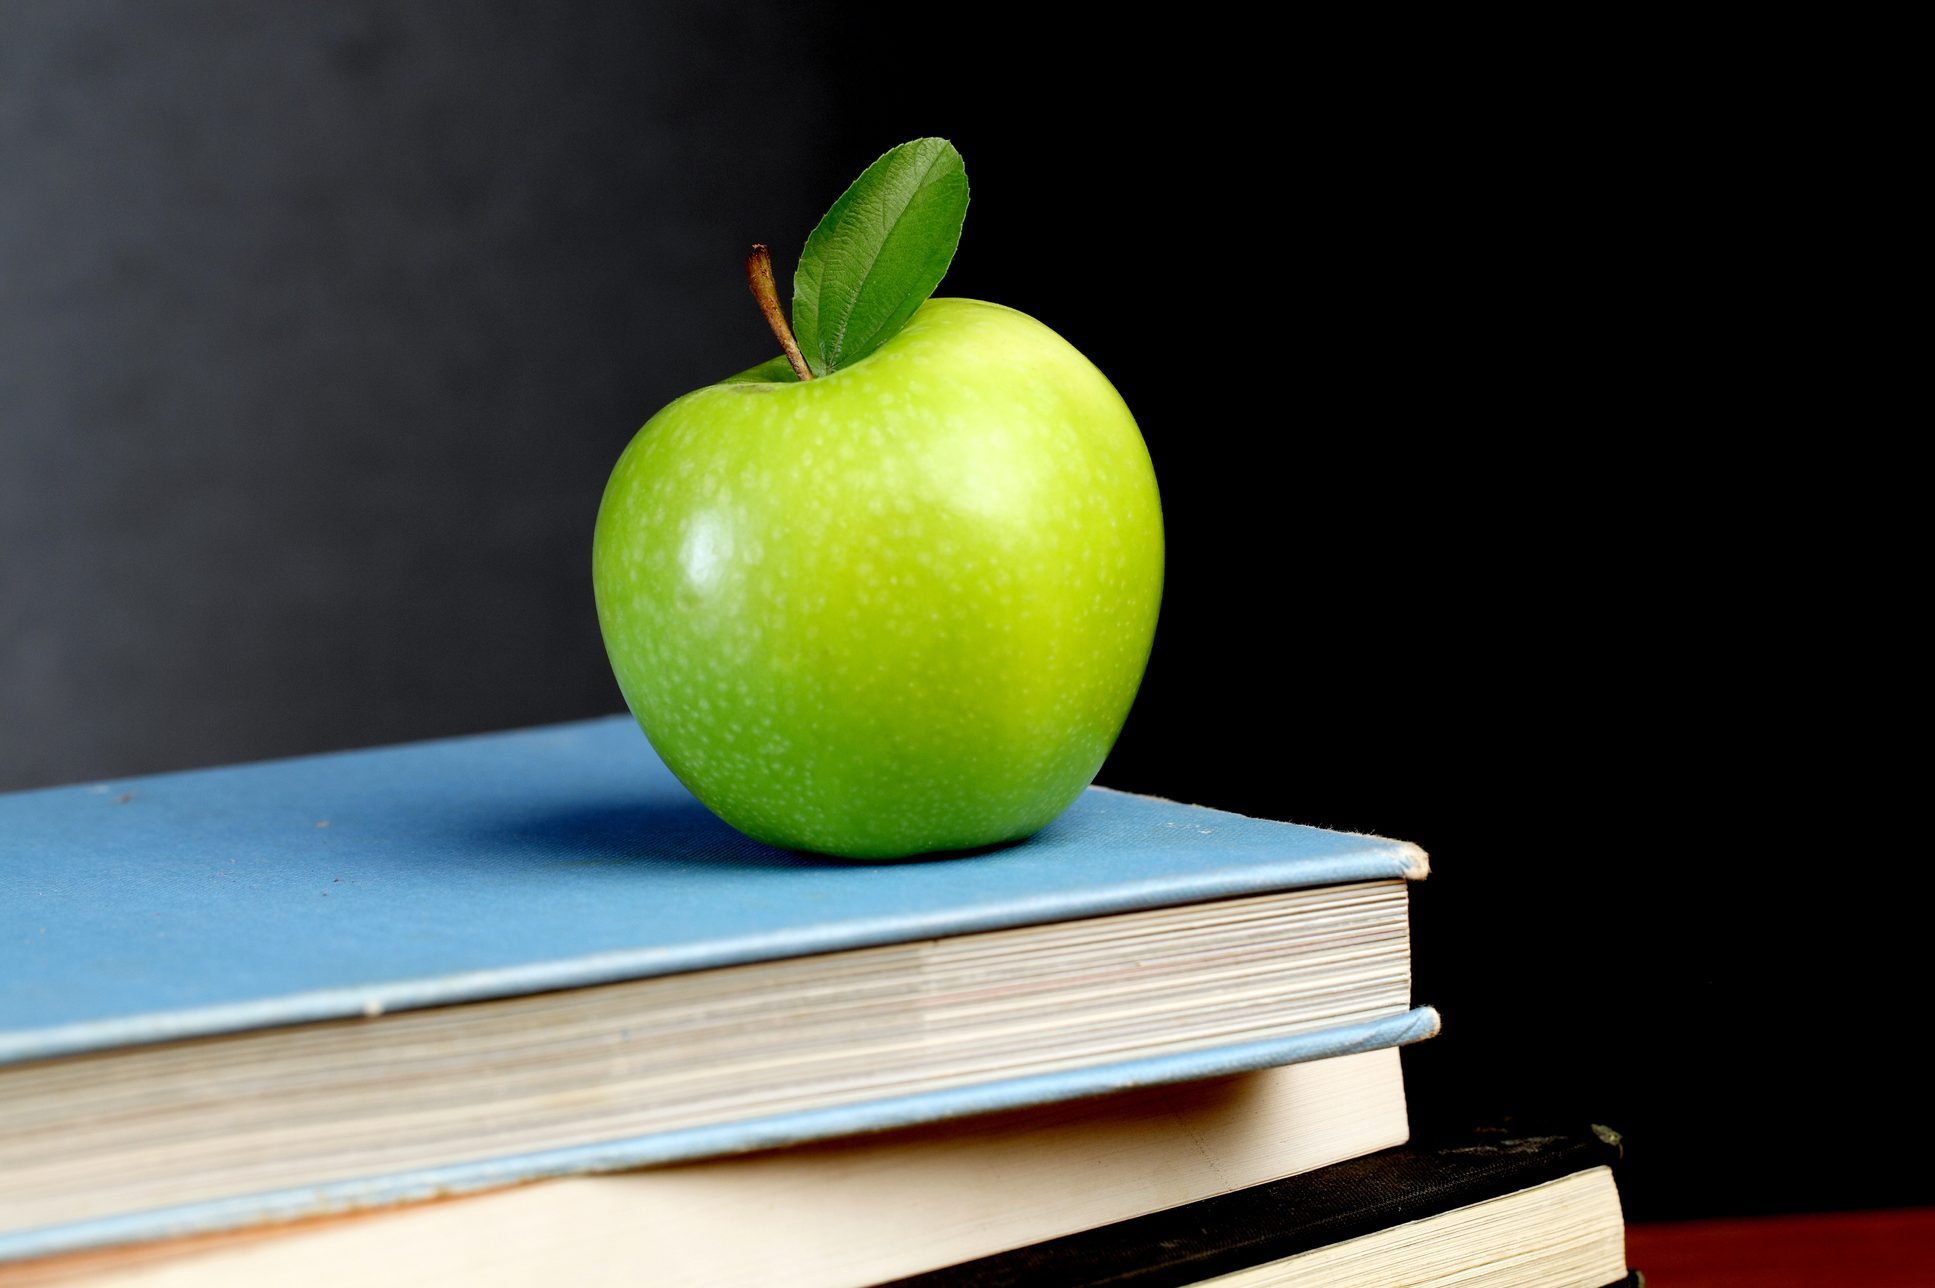 Granny smith apple on stack of books on a teacher's desk